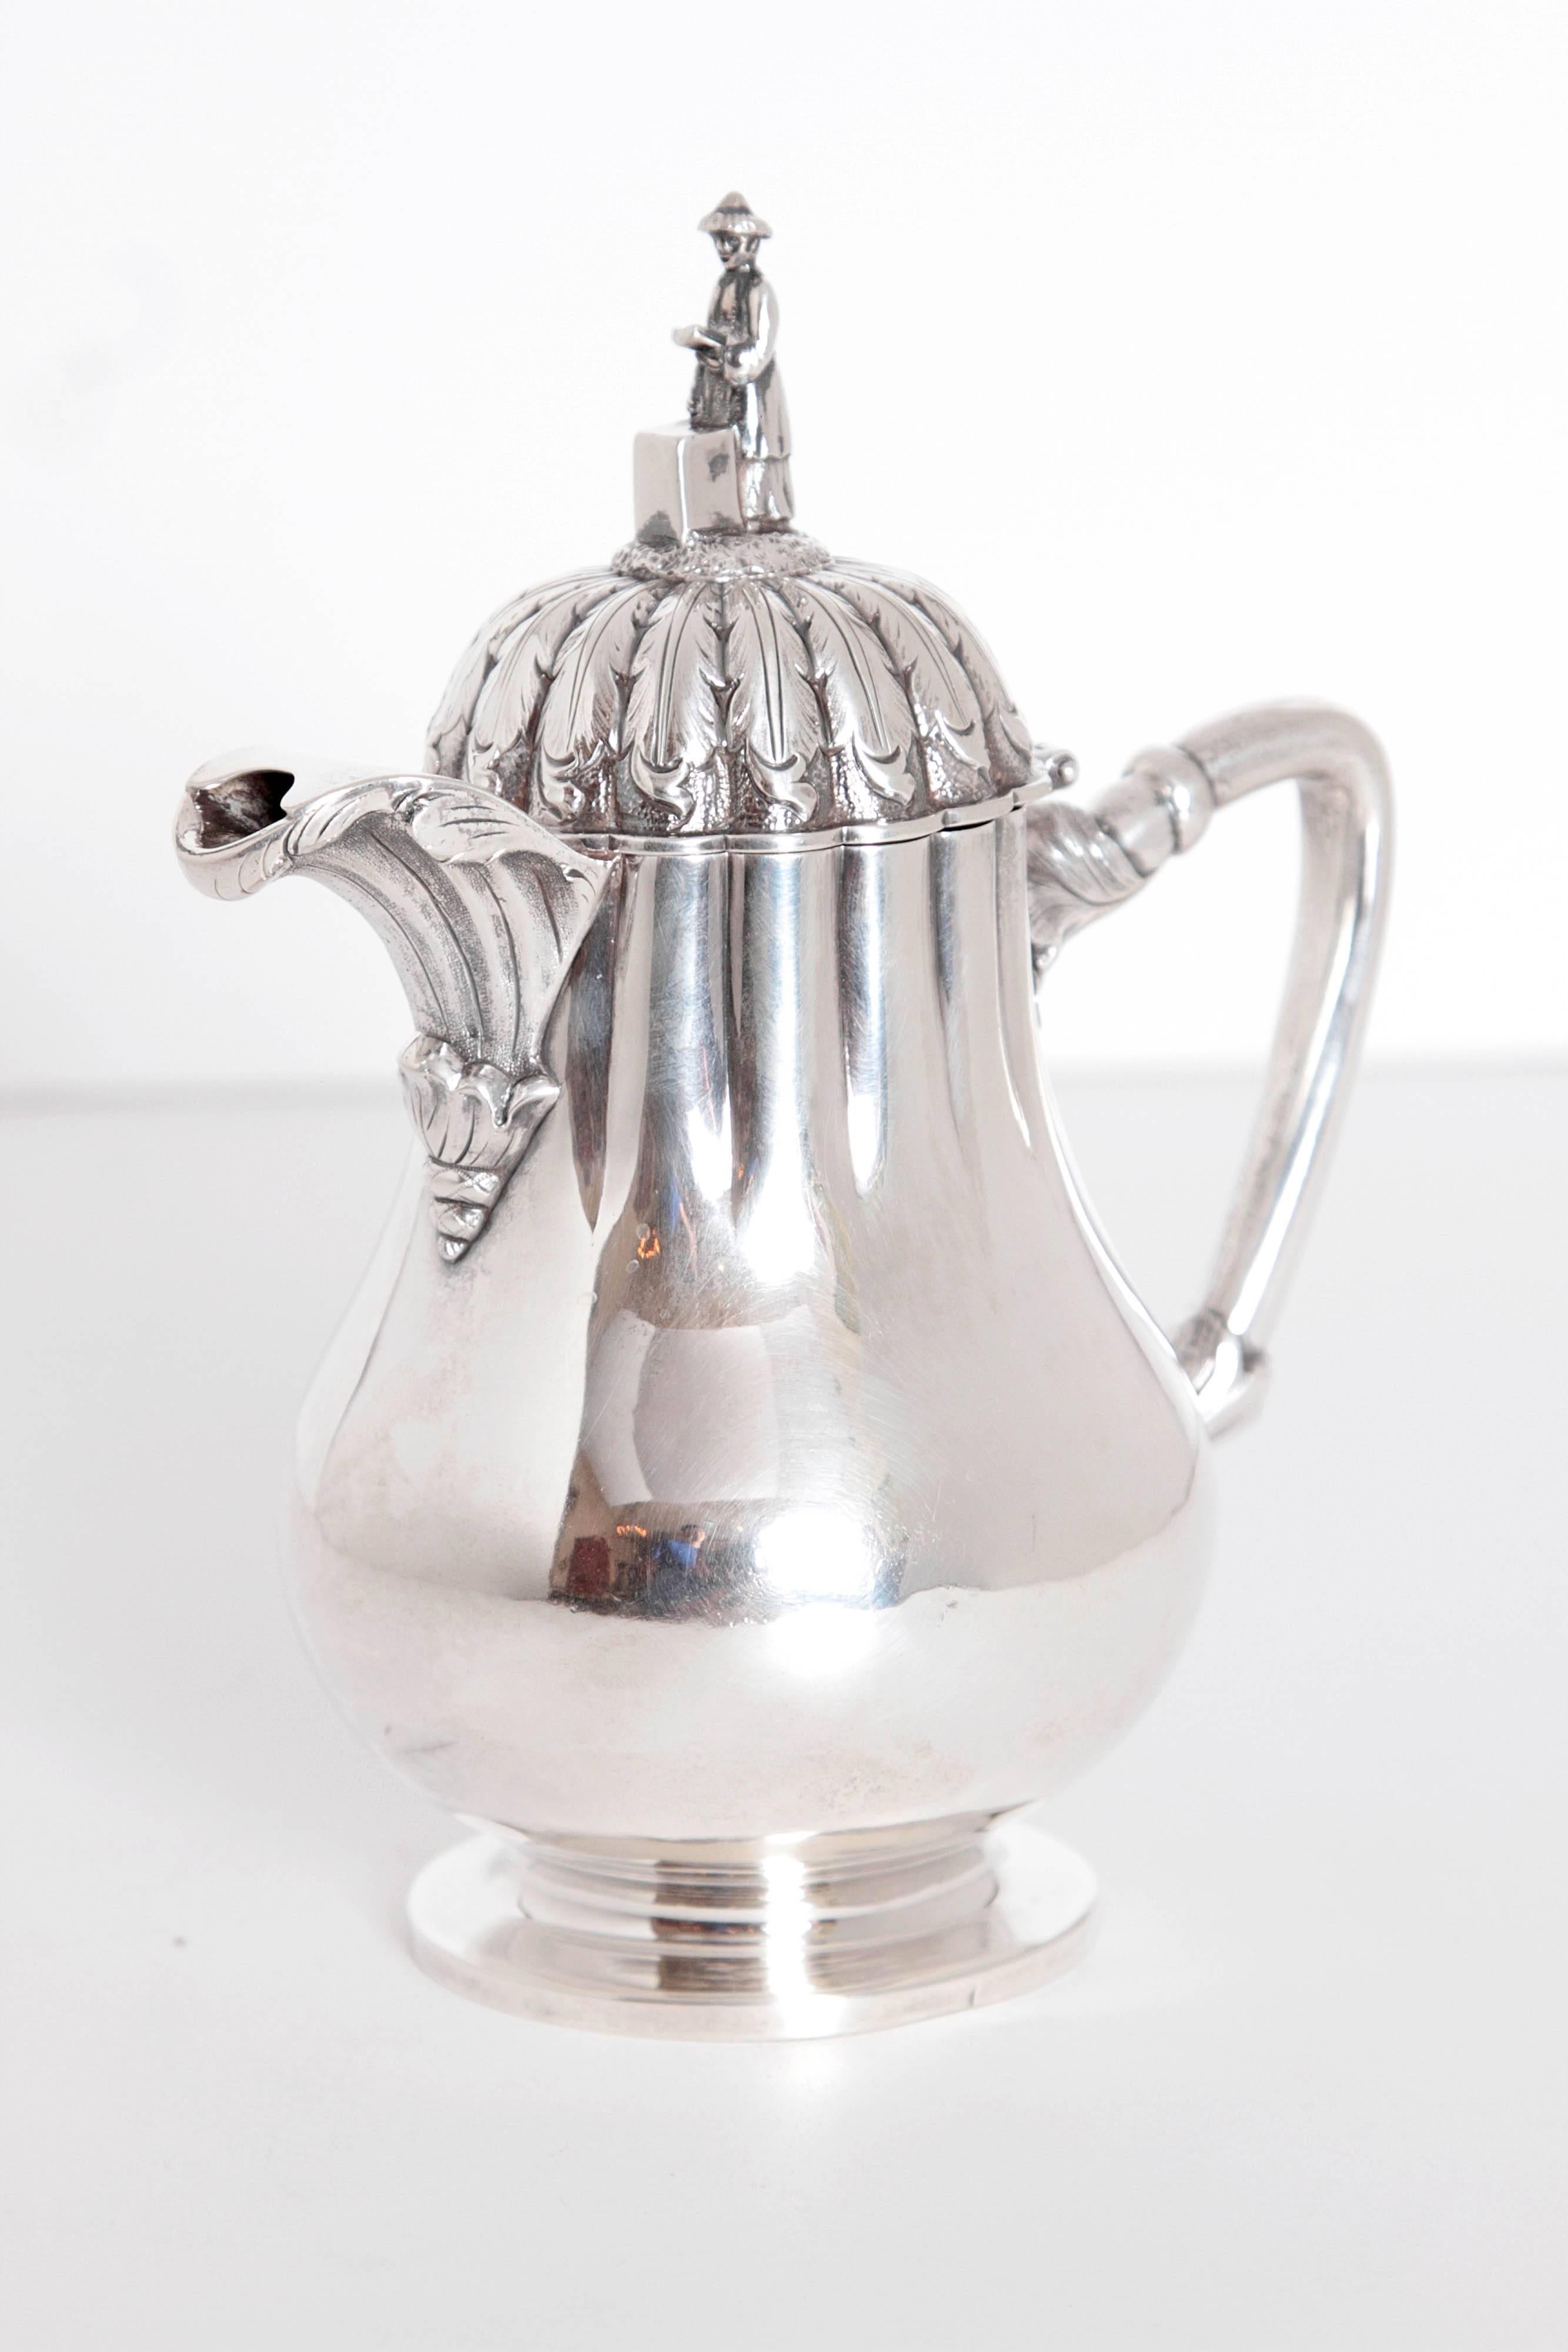 19th Century Silver Tea Set by Boston Silversmith Obadiah Rich